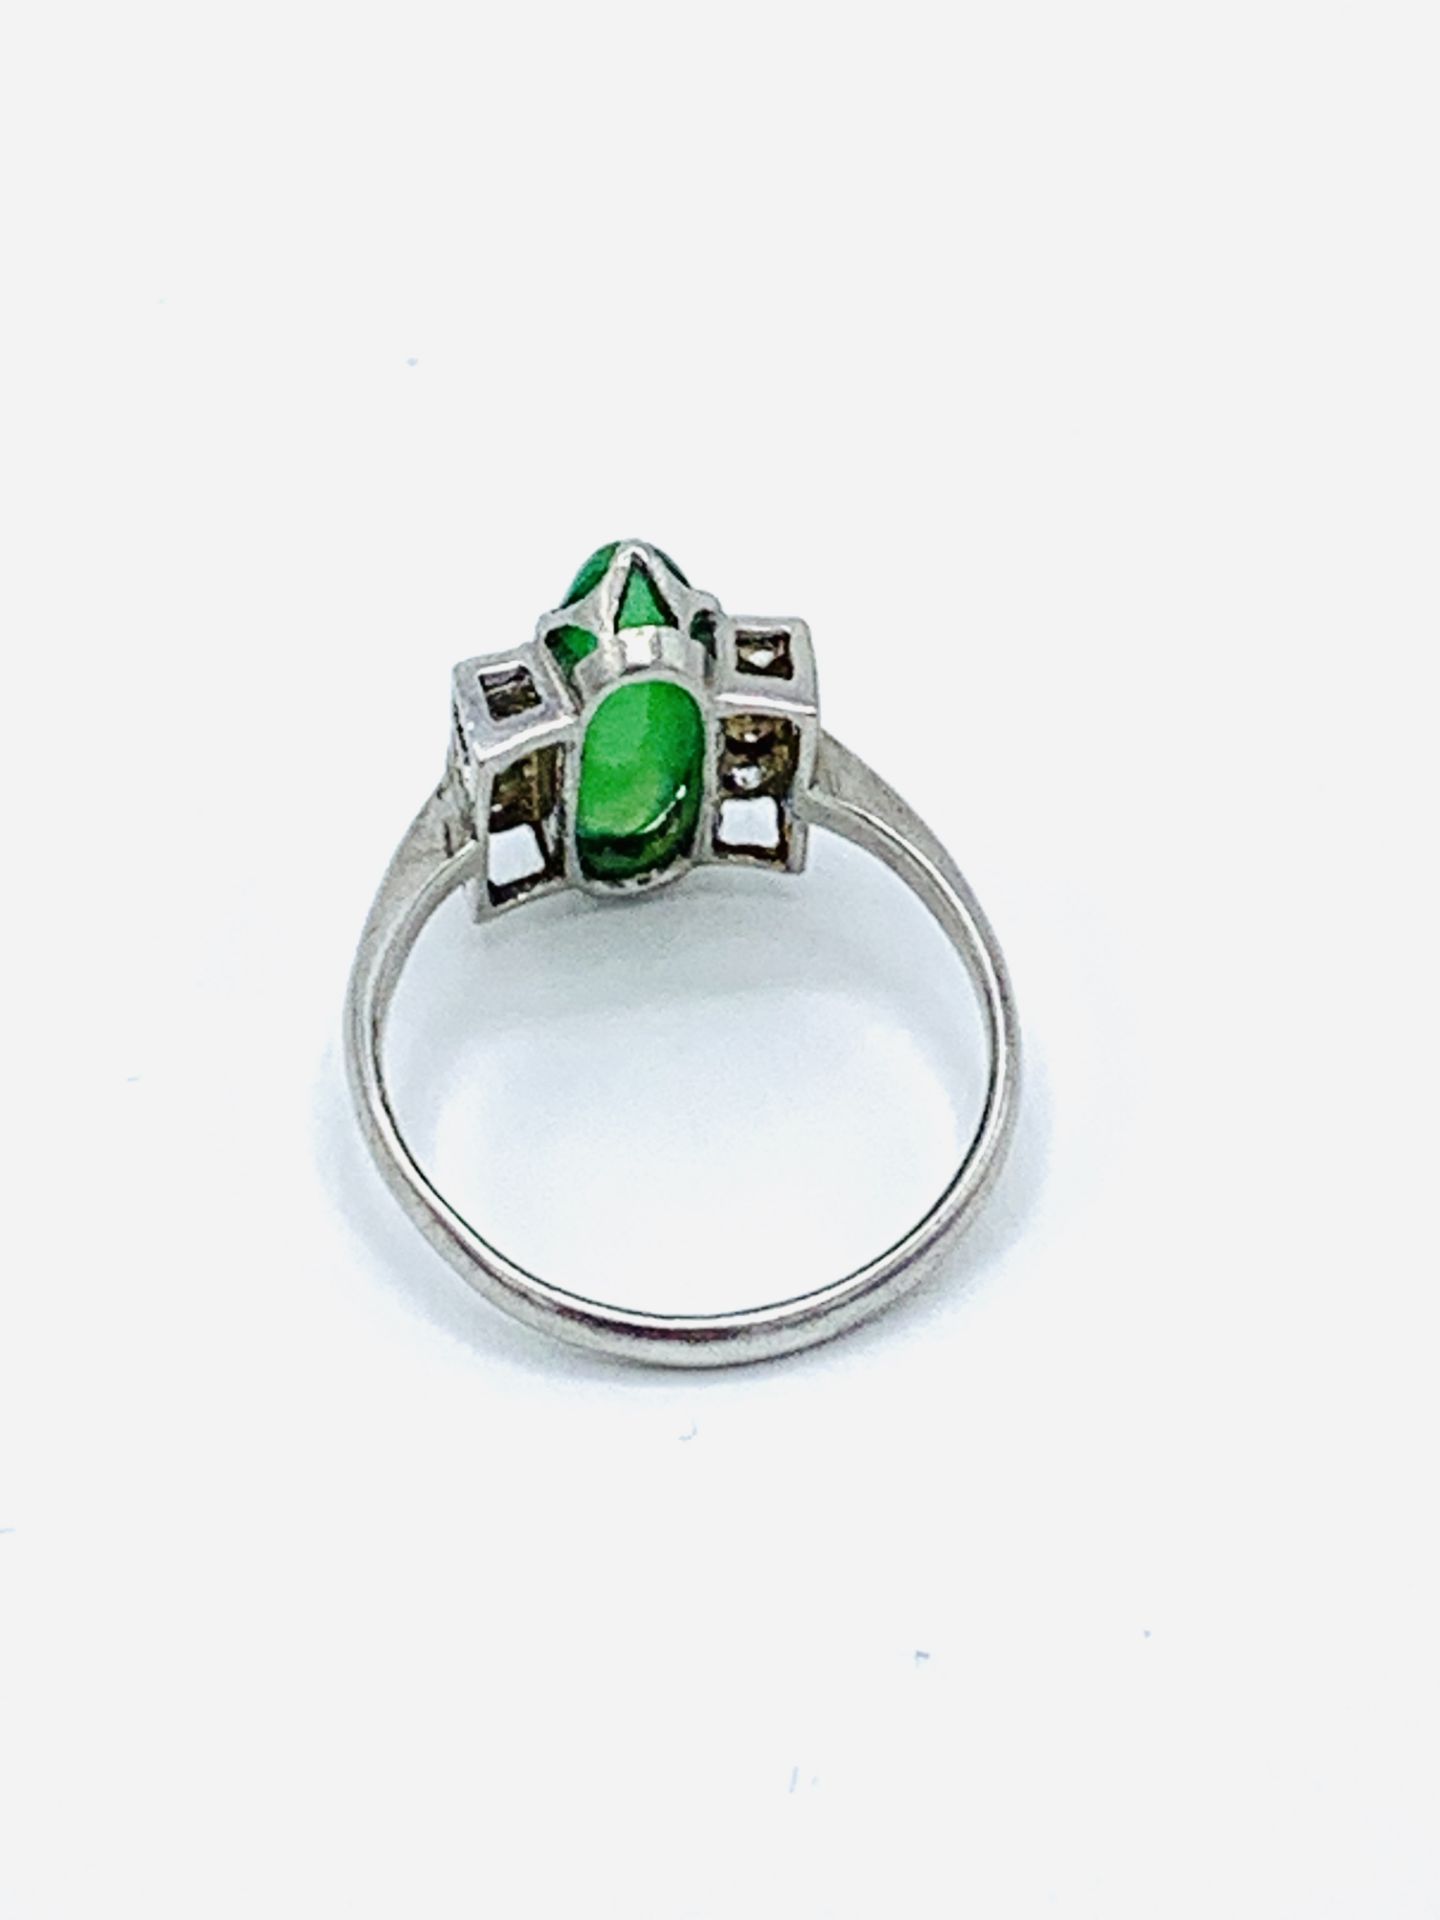 Jade and diamond ring. - Image 2 of 3